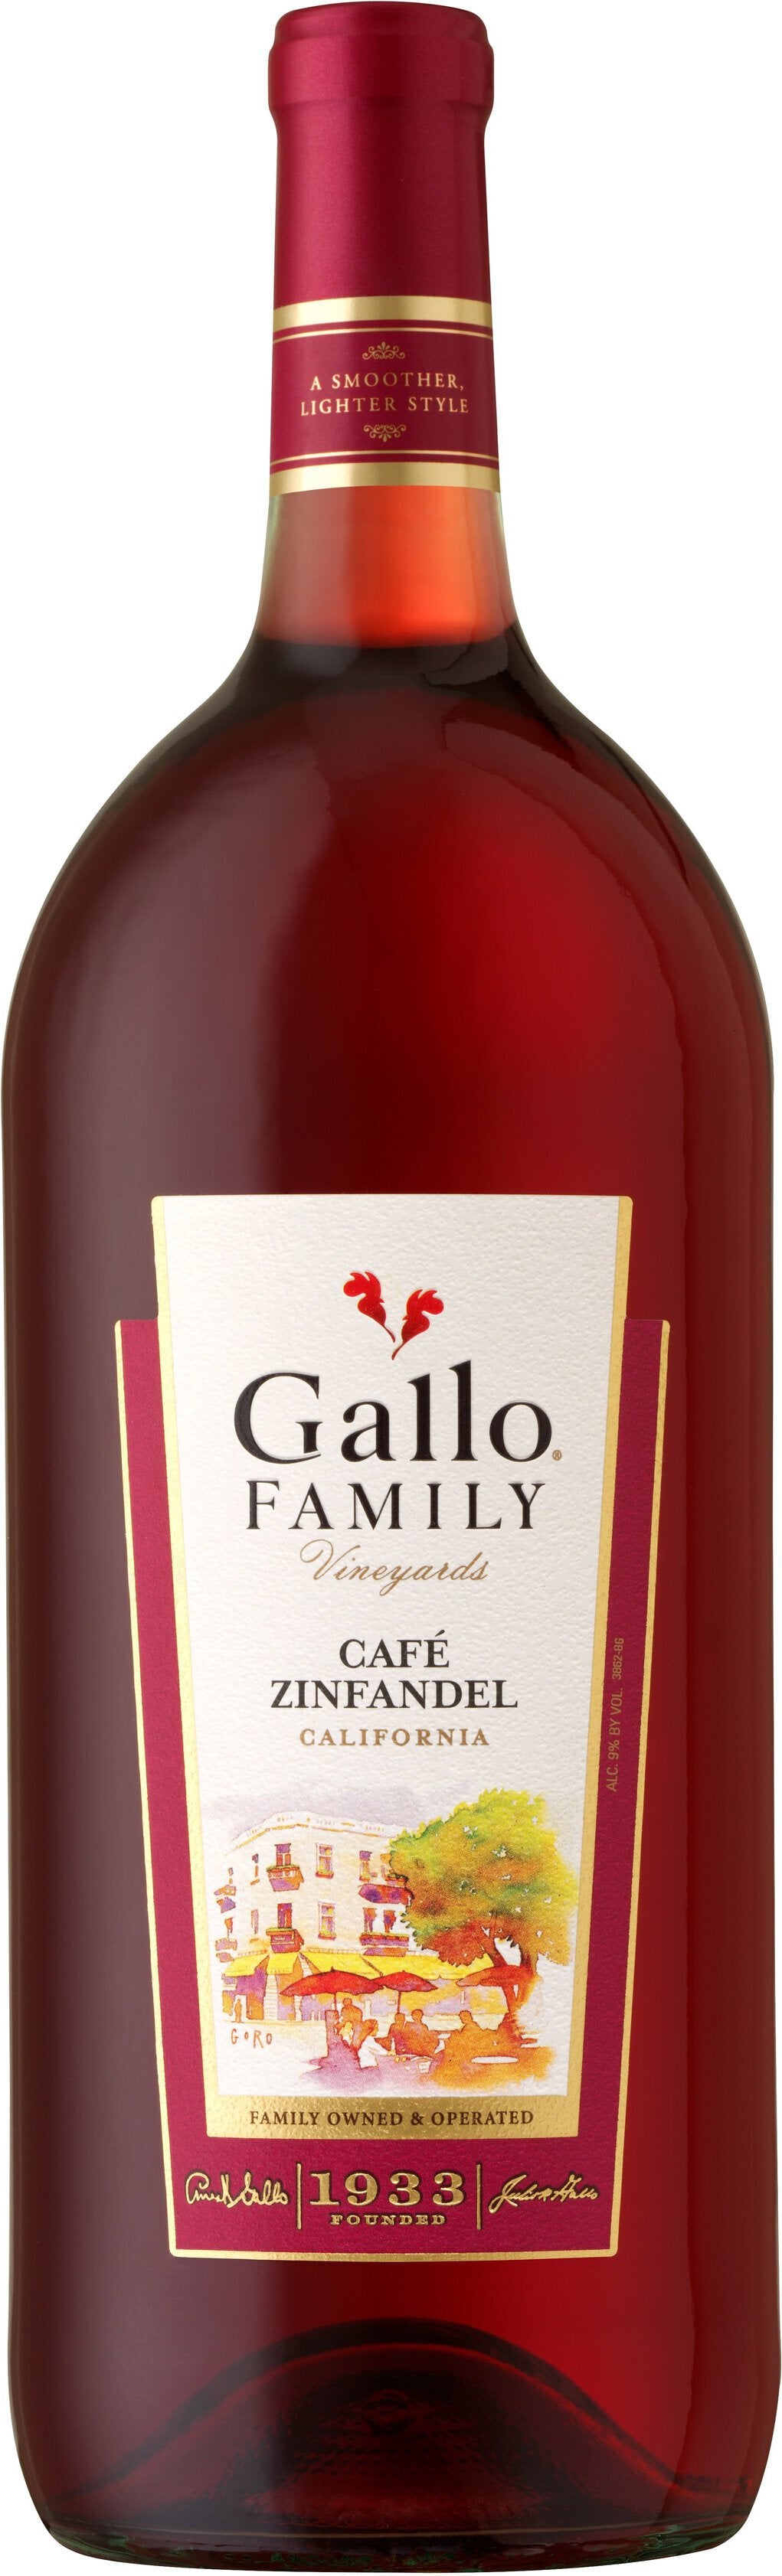 Gallo Family Cafe Zinfandel